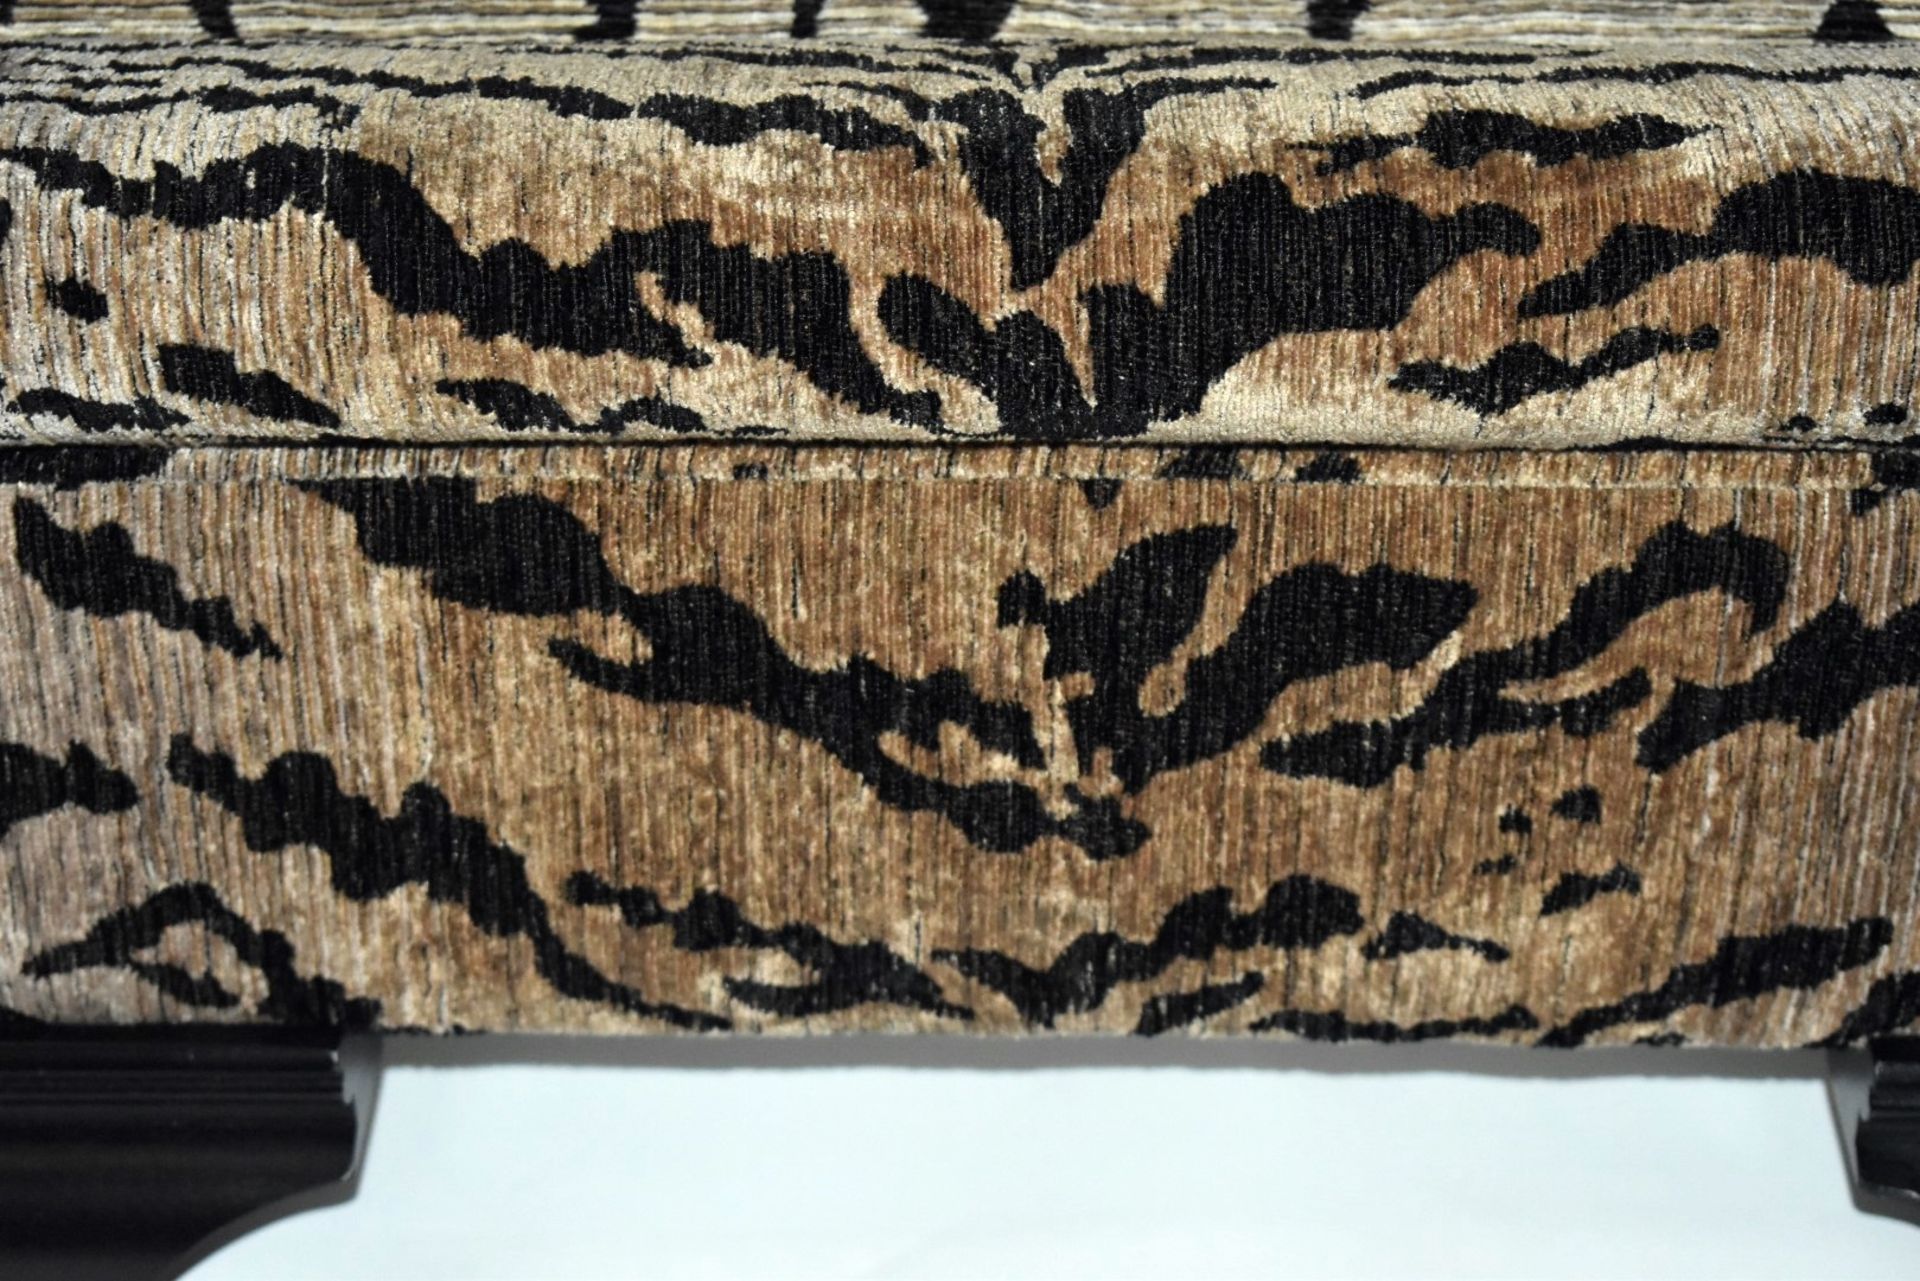 1 x DURESTA 'Kubla Khan' Large Luxury Footstool - Handmade By British Artisans - Original RRP £1,399 - Image 3 of 8